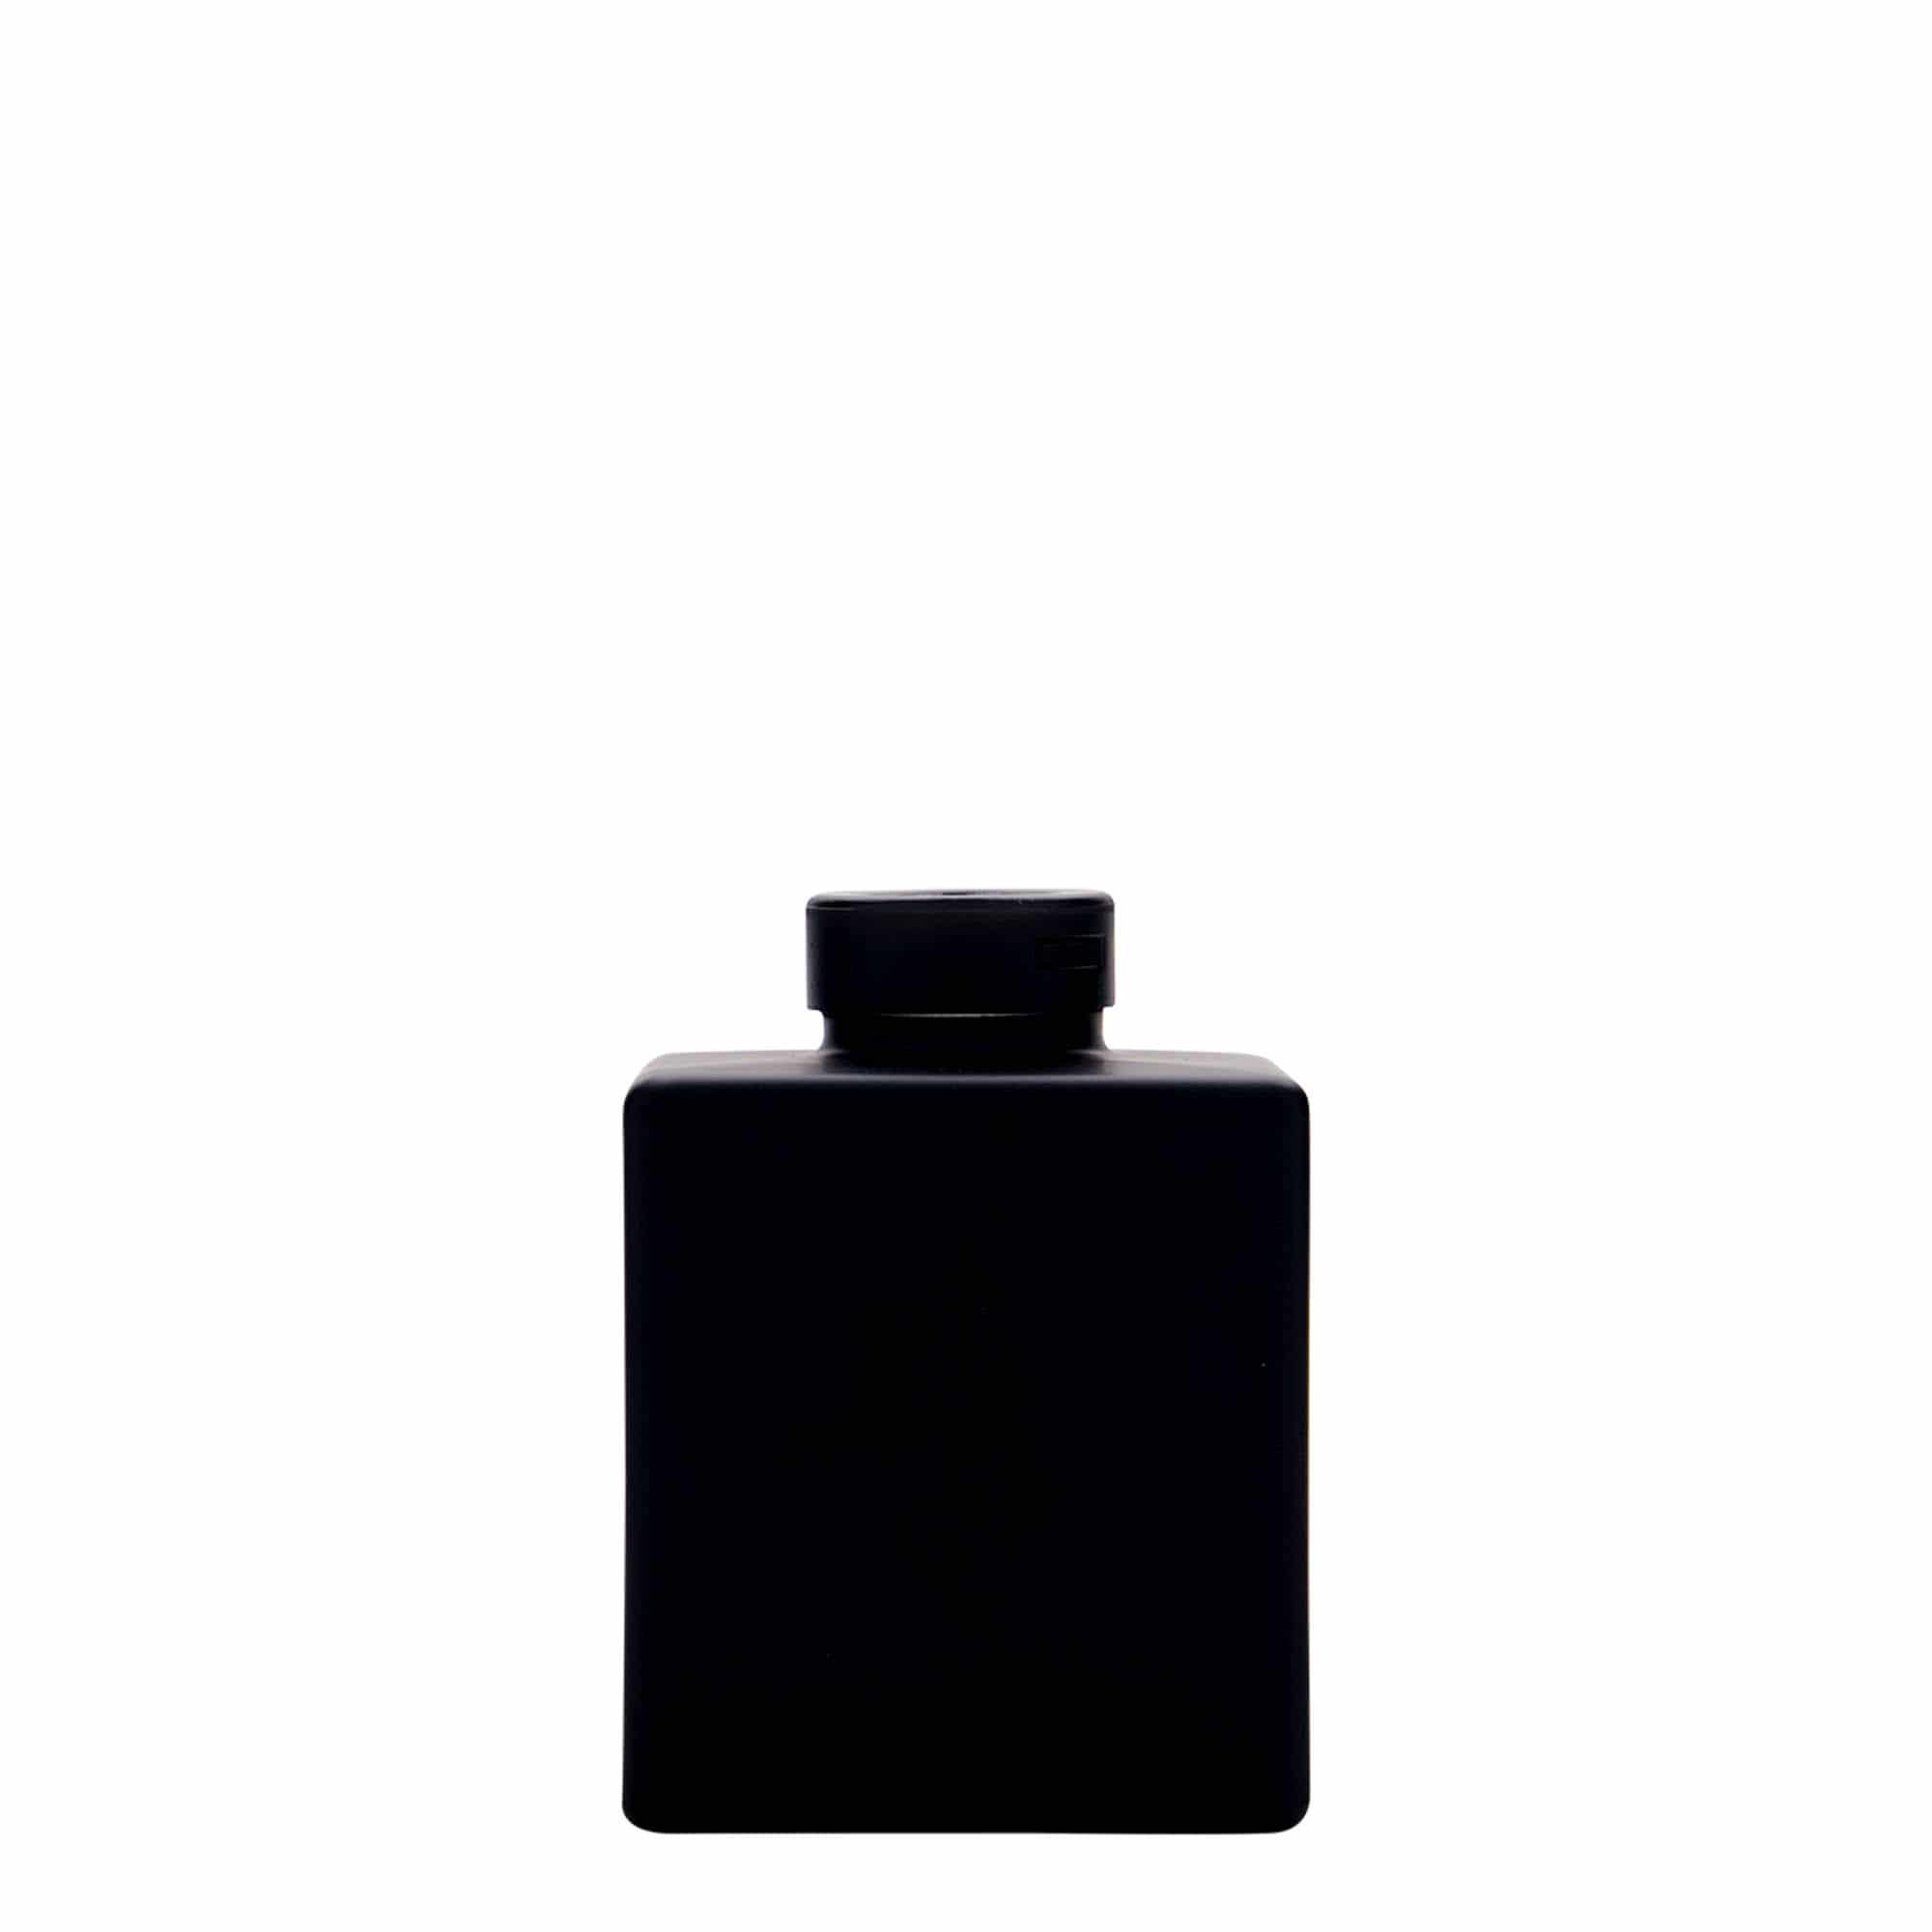 100 ml glass bottle 'Cube', square, black, closure: cork